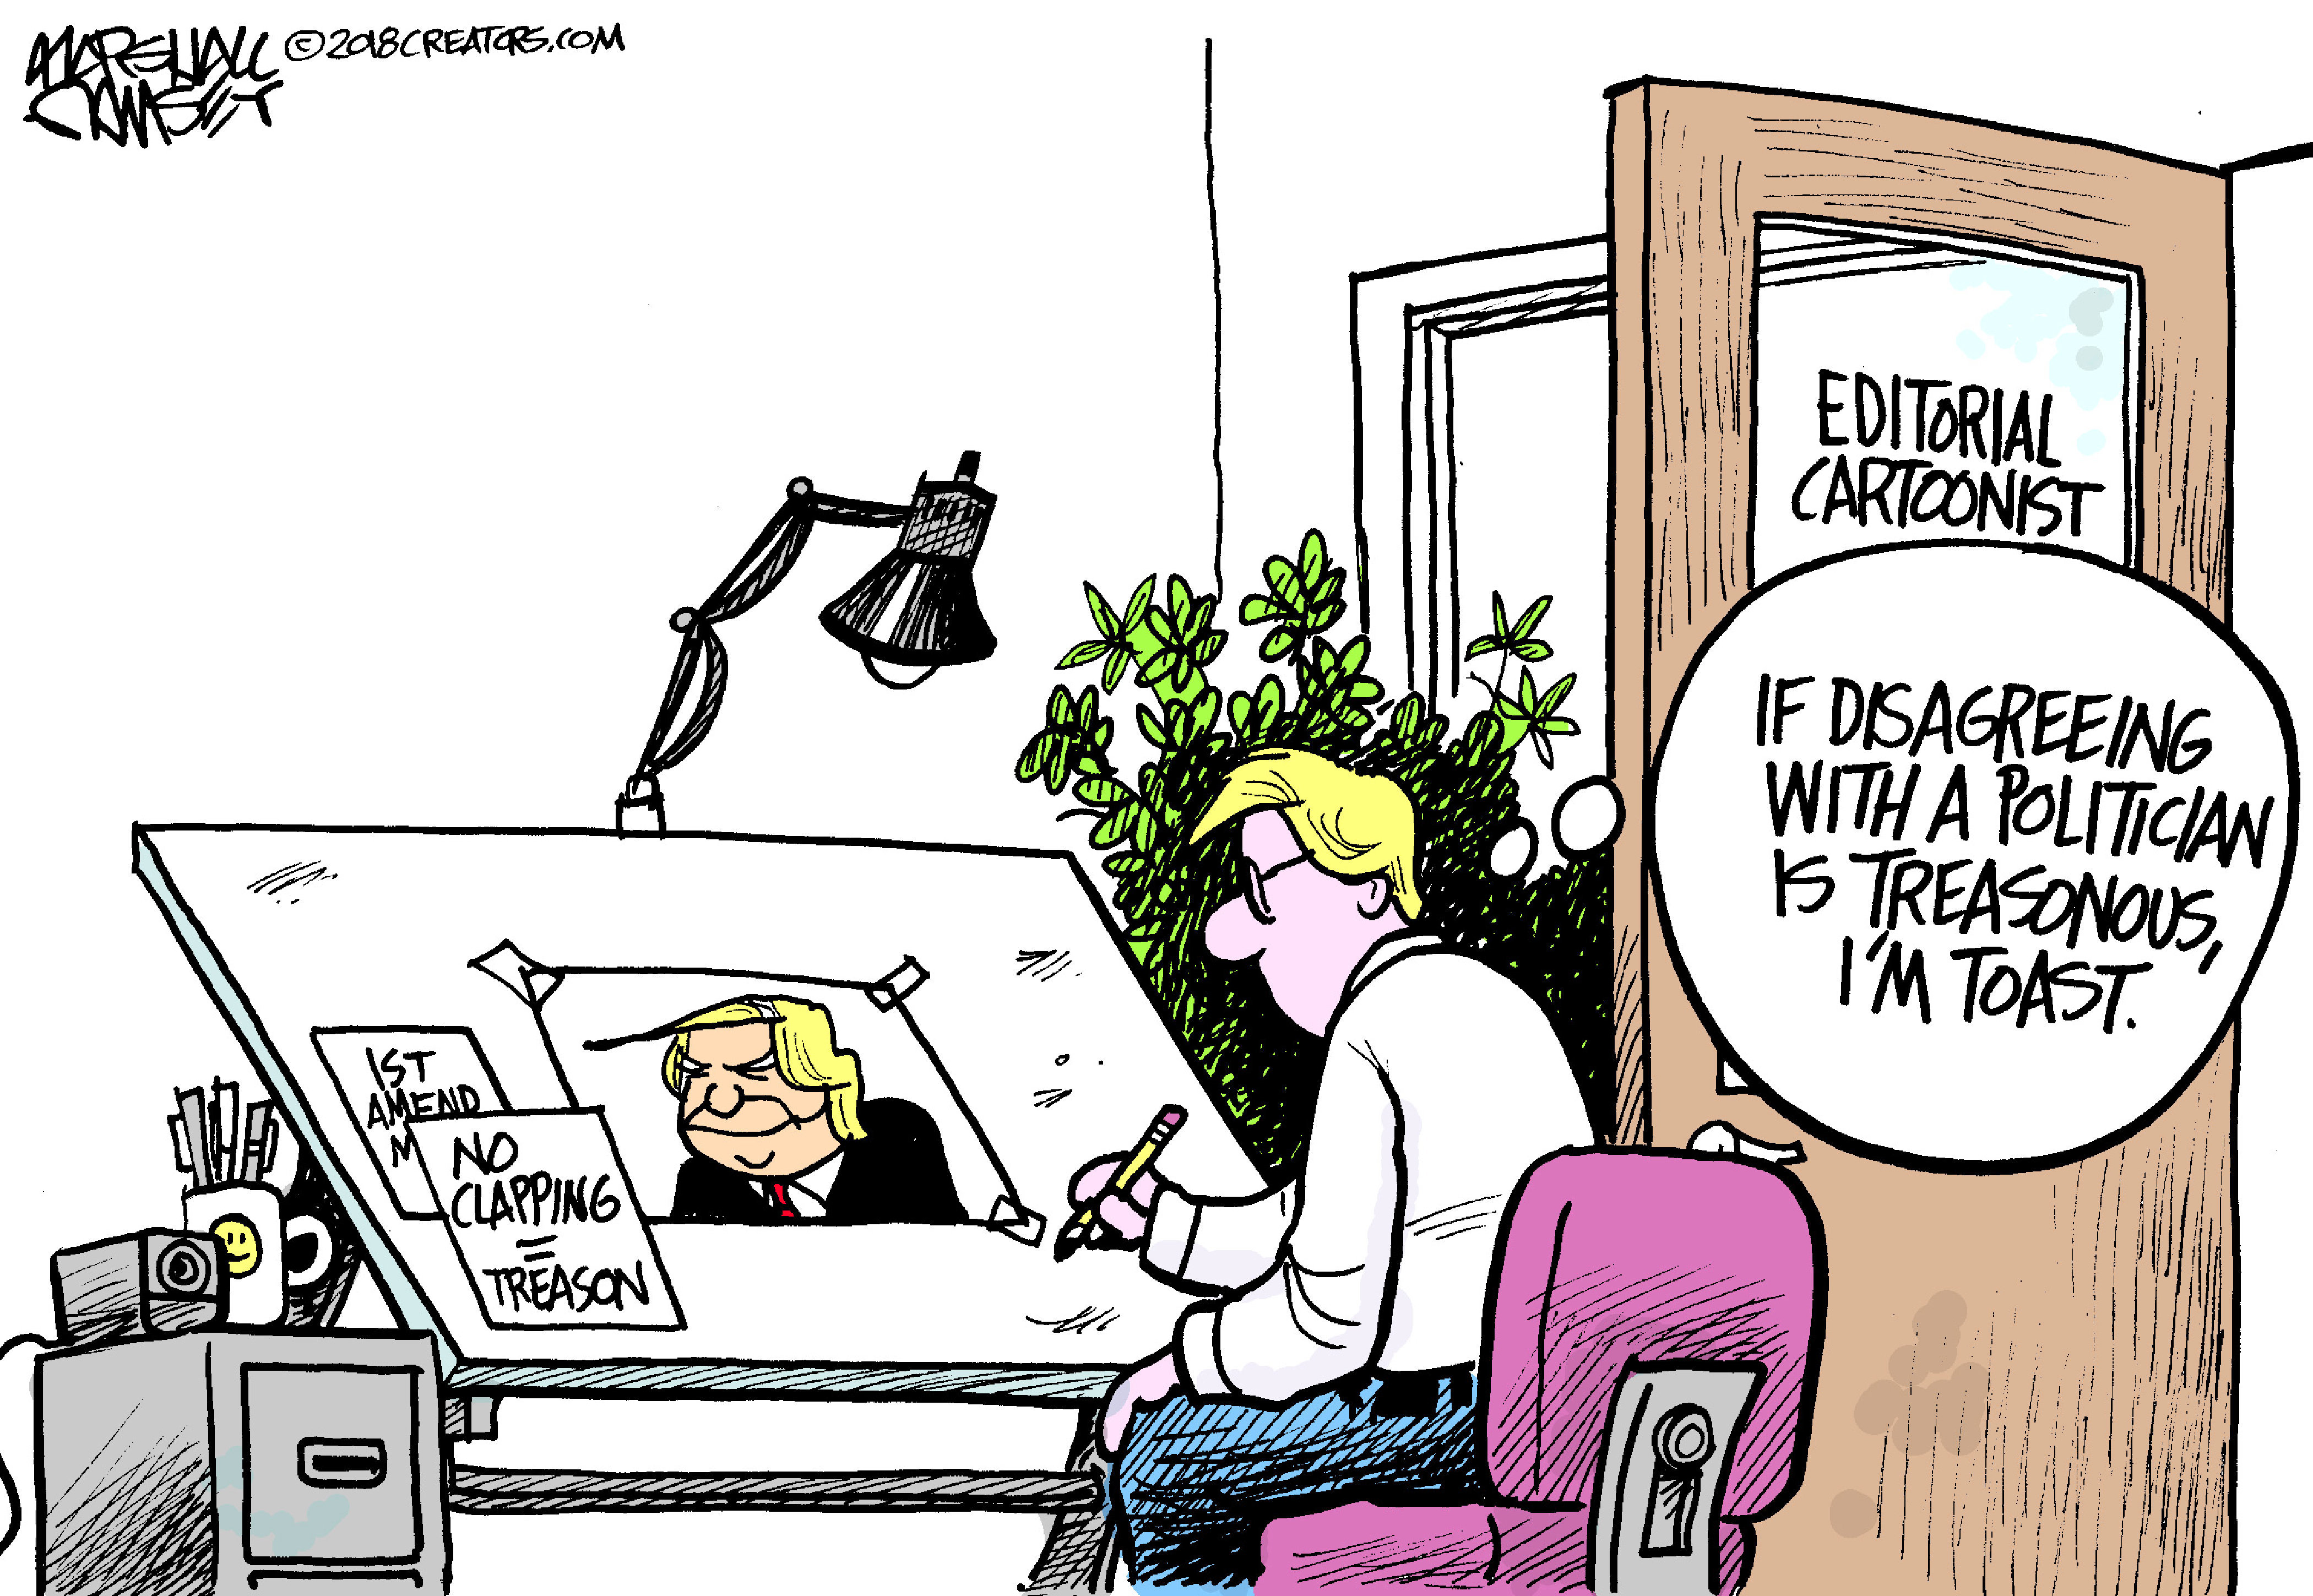 Political cartoon . Trump treason cartoonist free speech